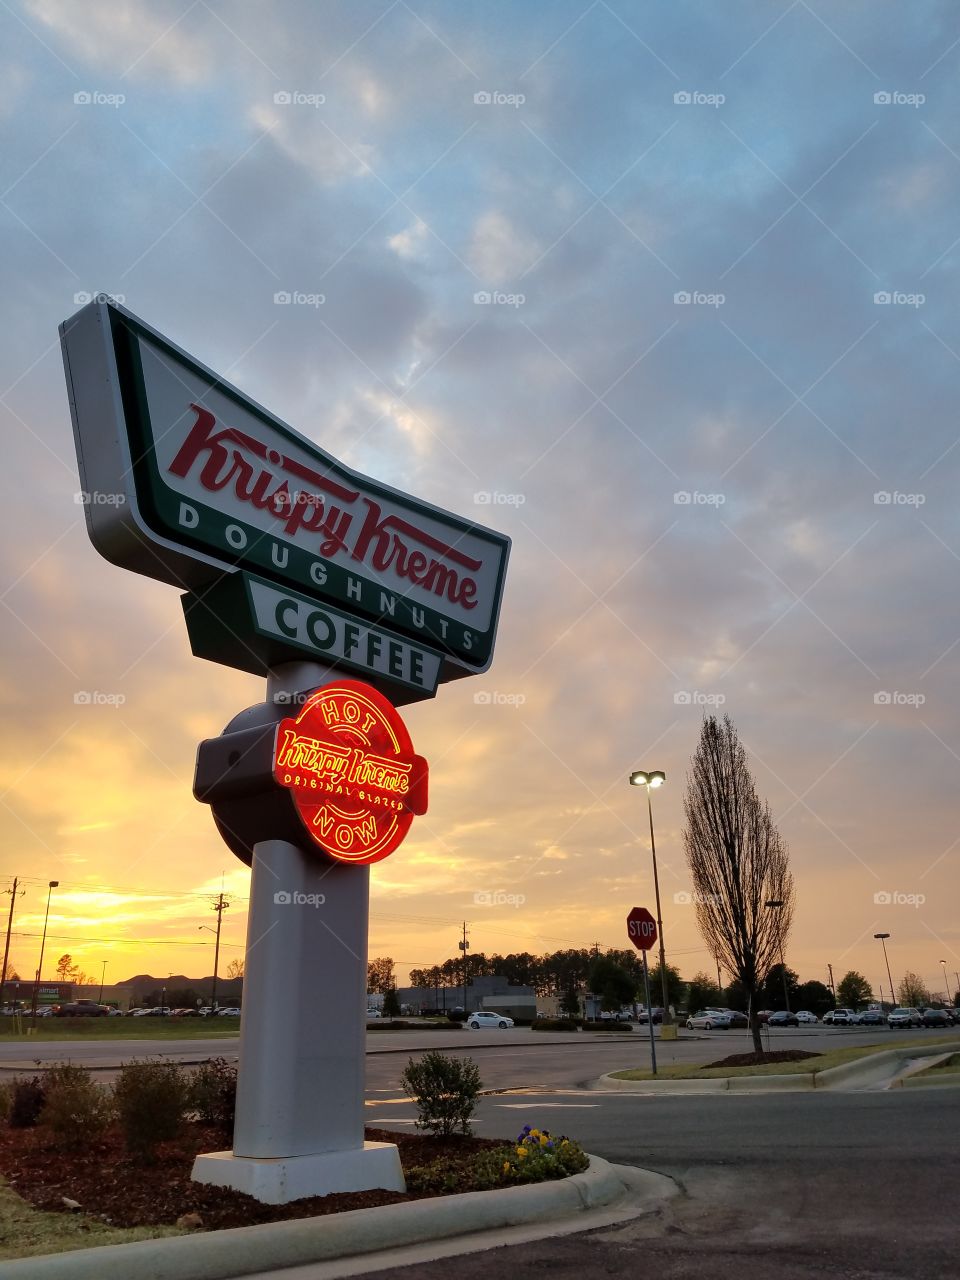 A Krispy Kreme Doughnuts sign at sunset in Auburn AL.